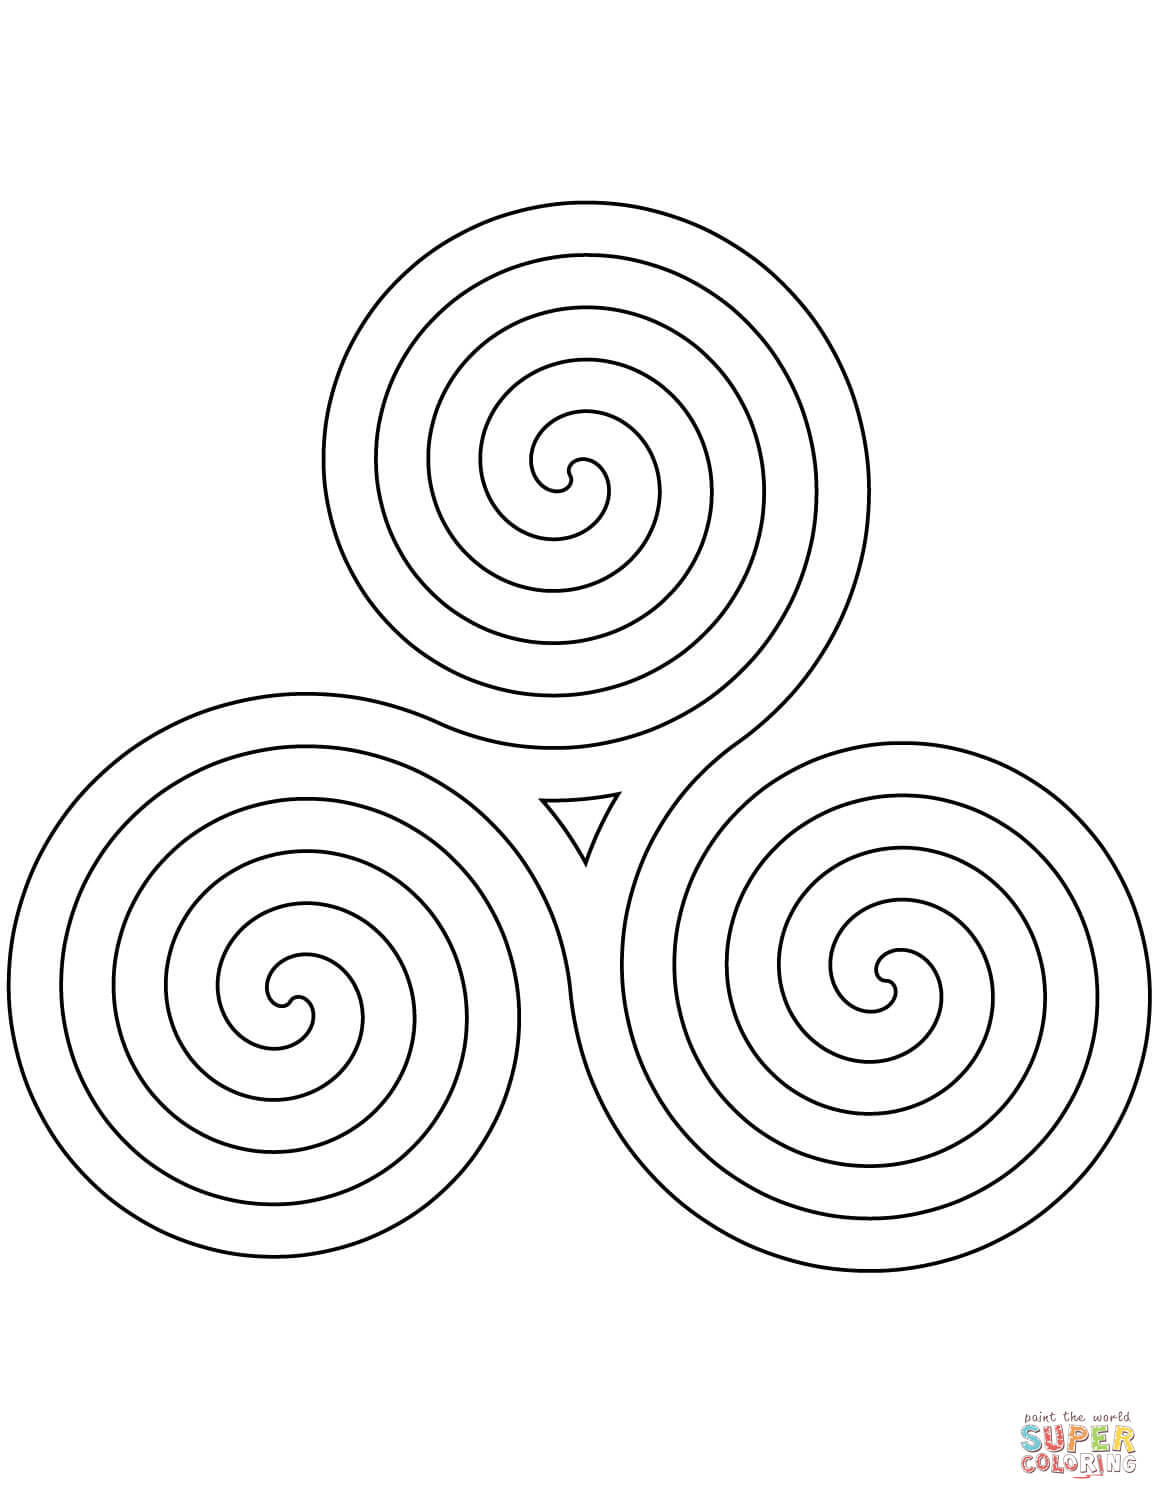 Spiral Drawing at GetDrawings | Free download